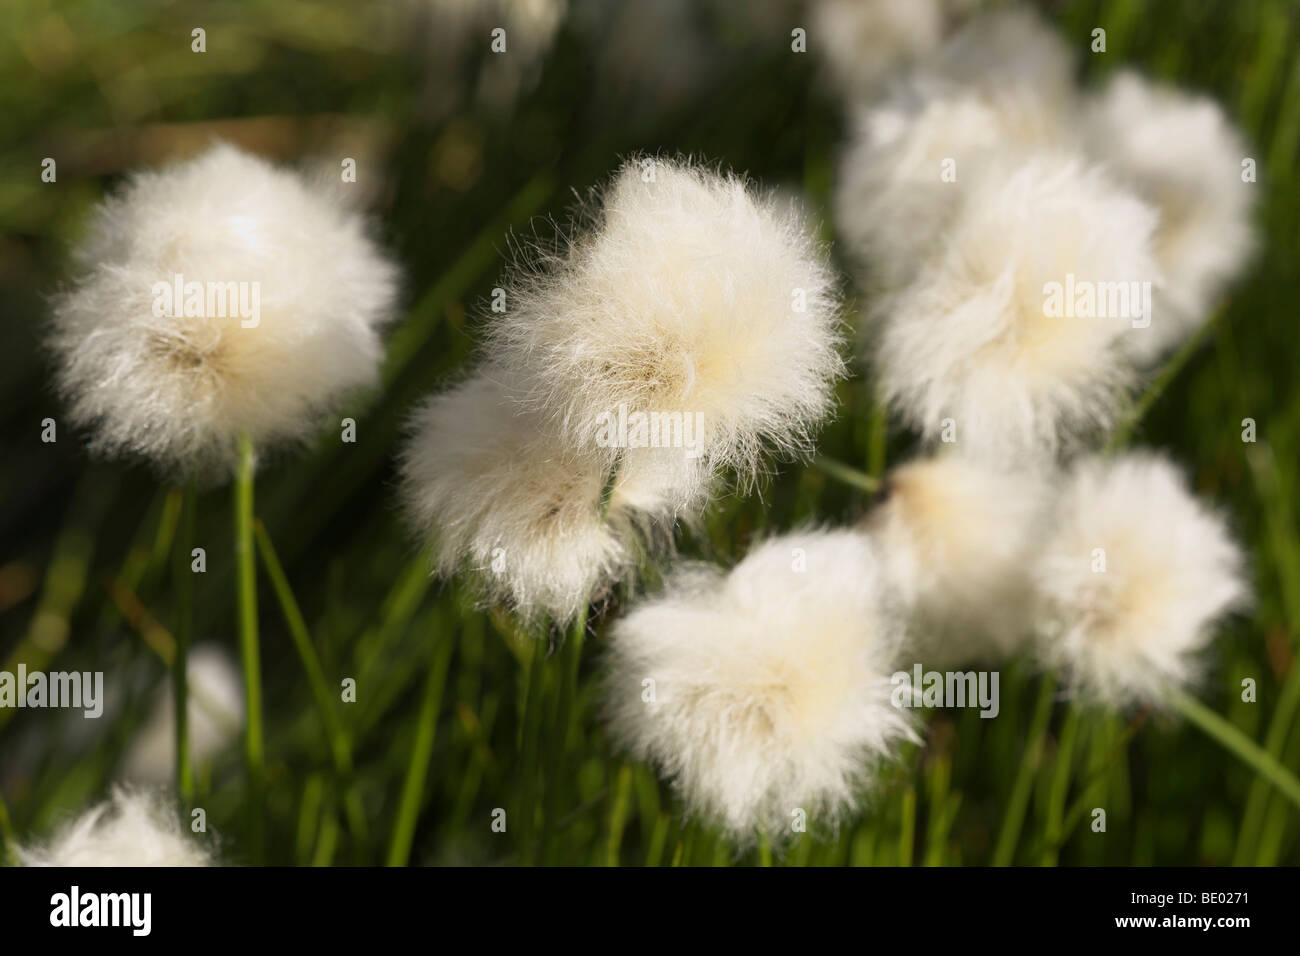 White Cottongrass (Eriophorum scheuchzeri) Stock Photo